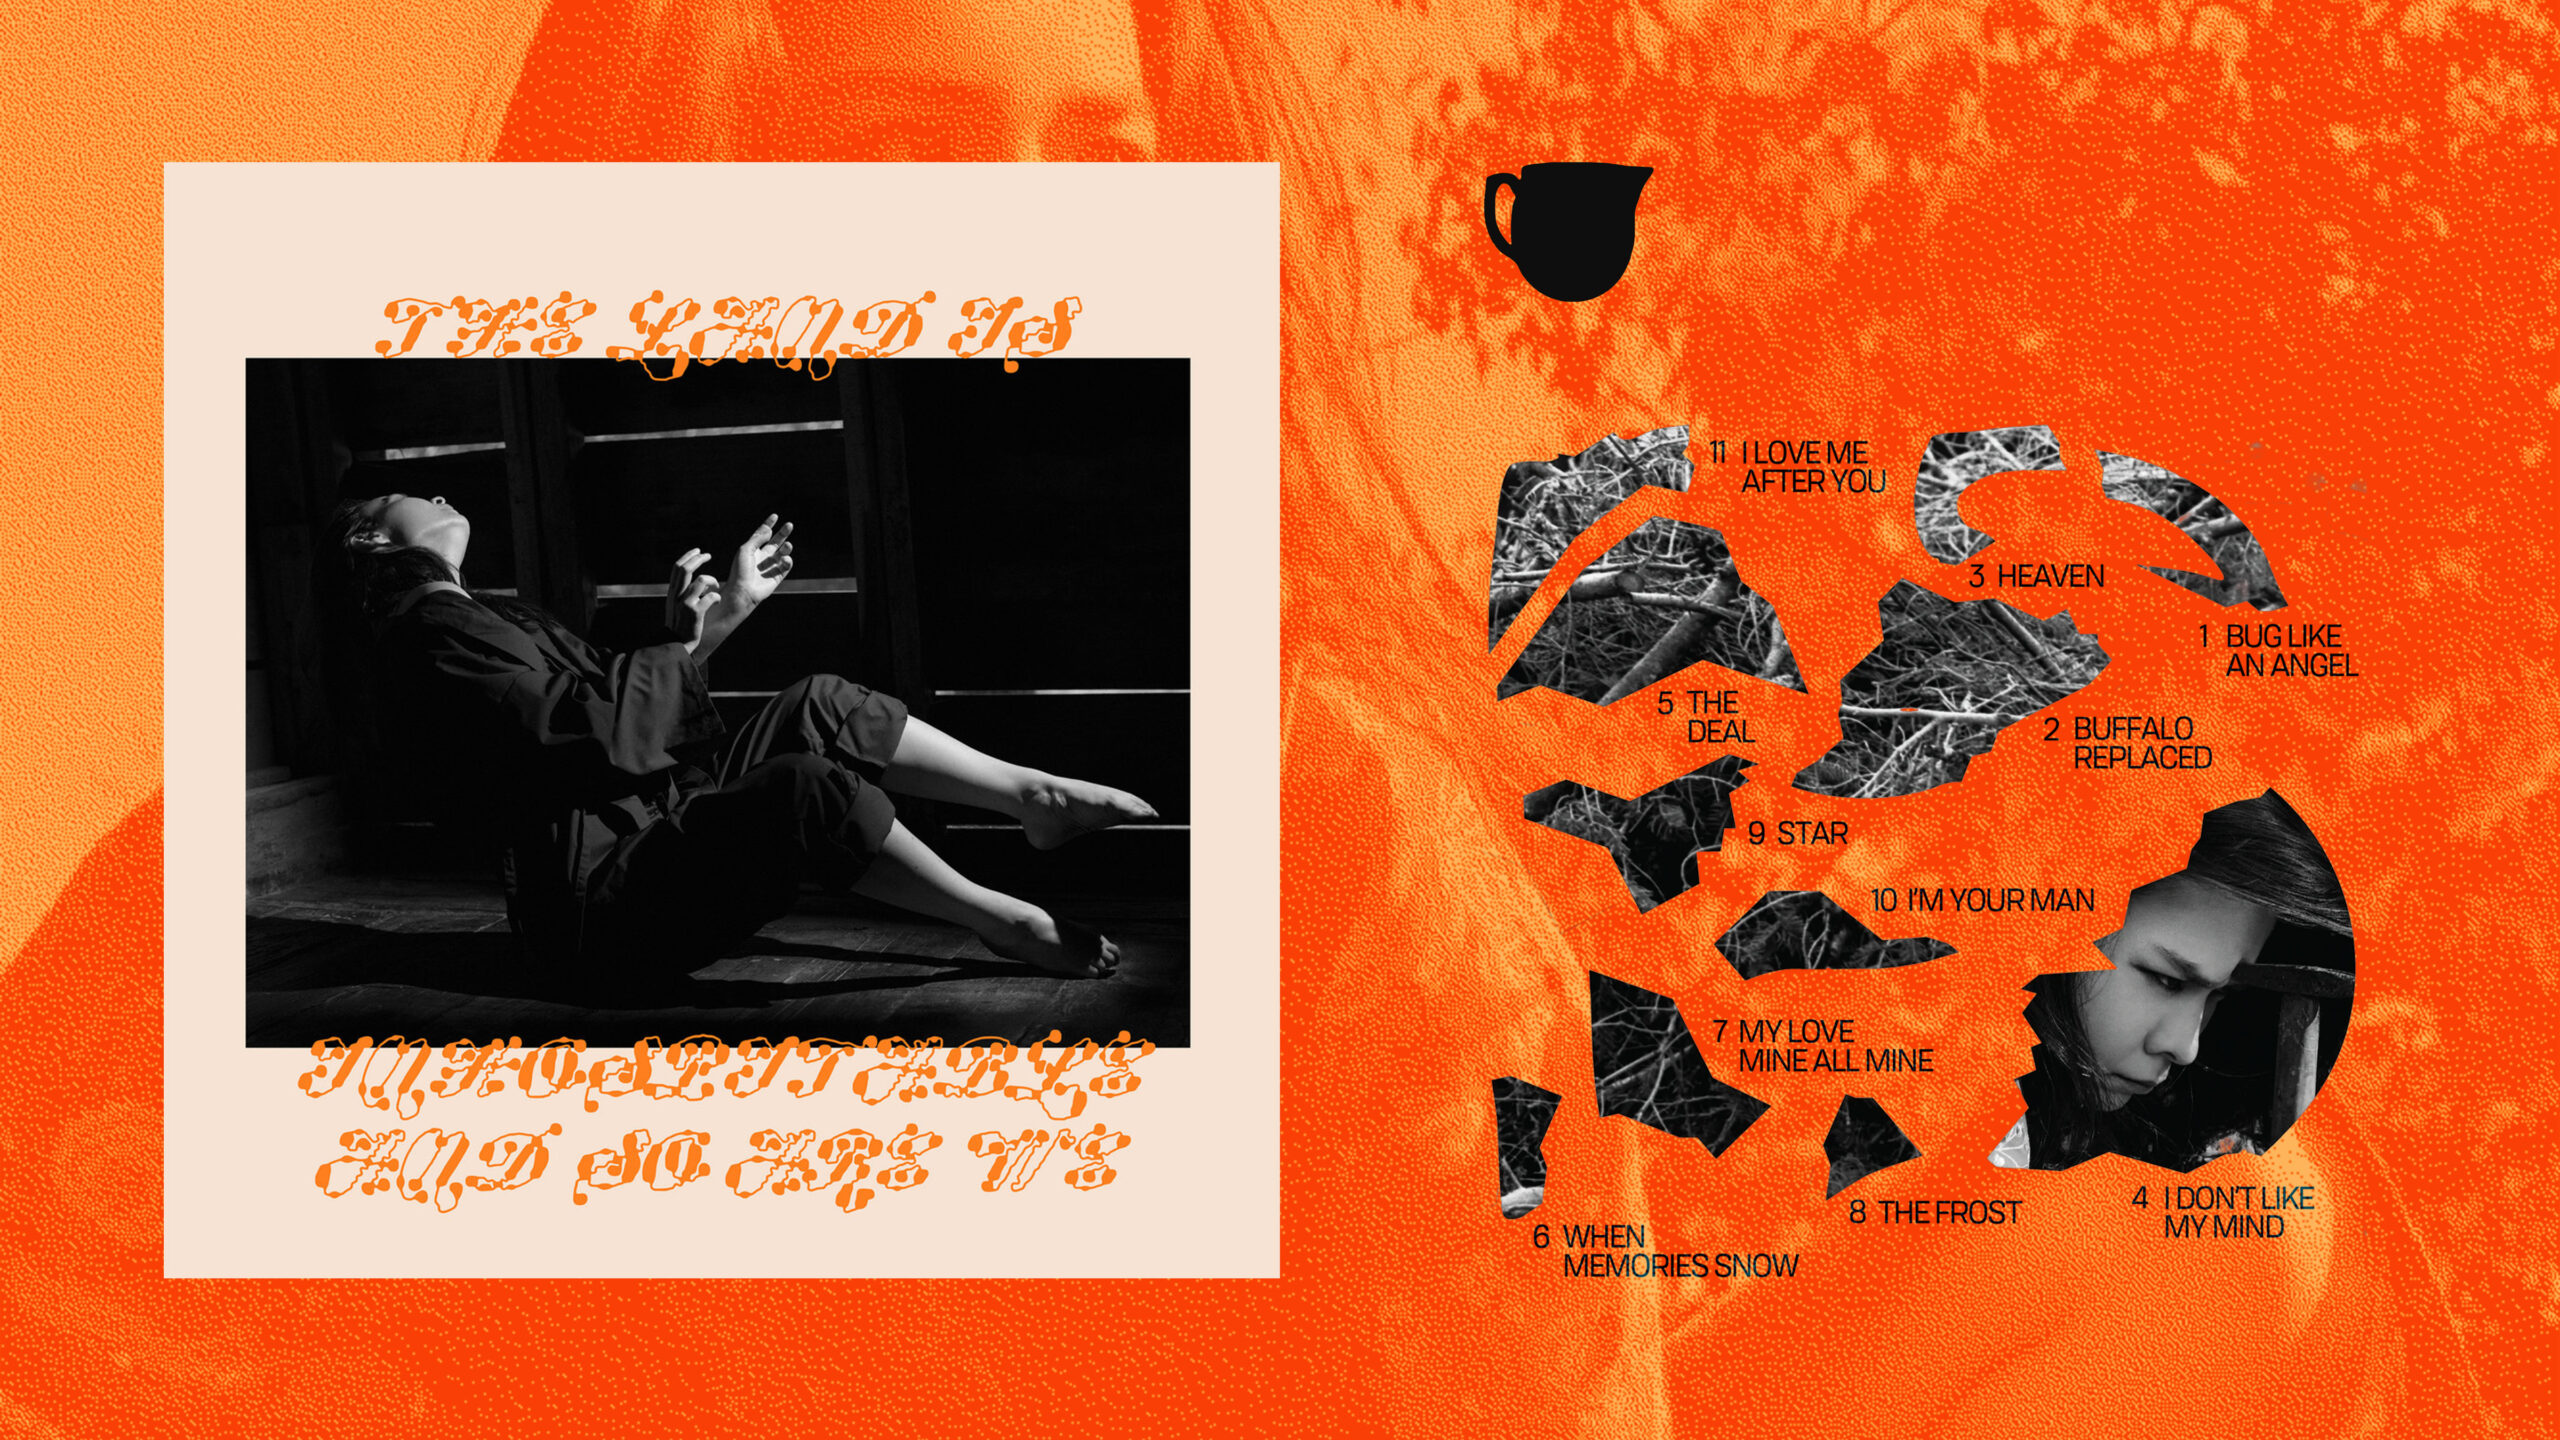 Album cover and track list against orange background